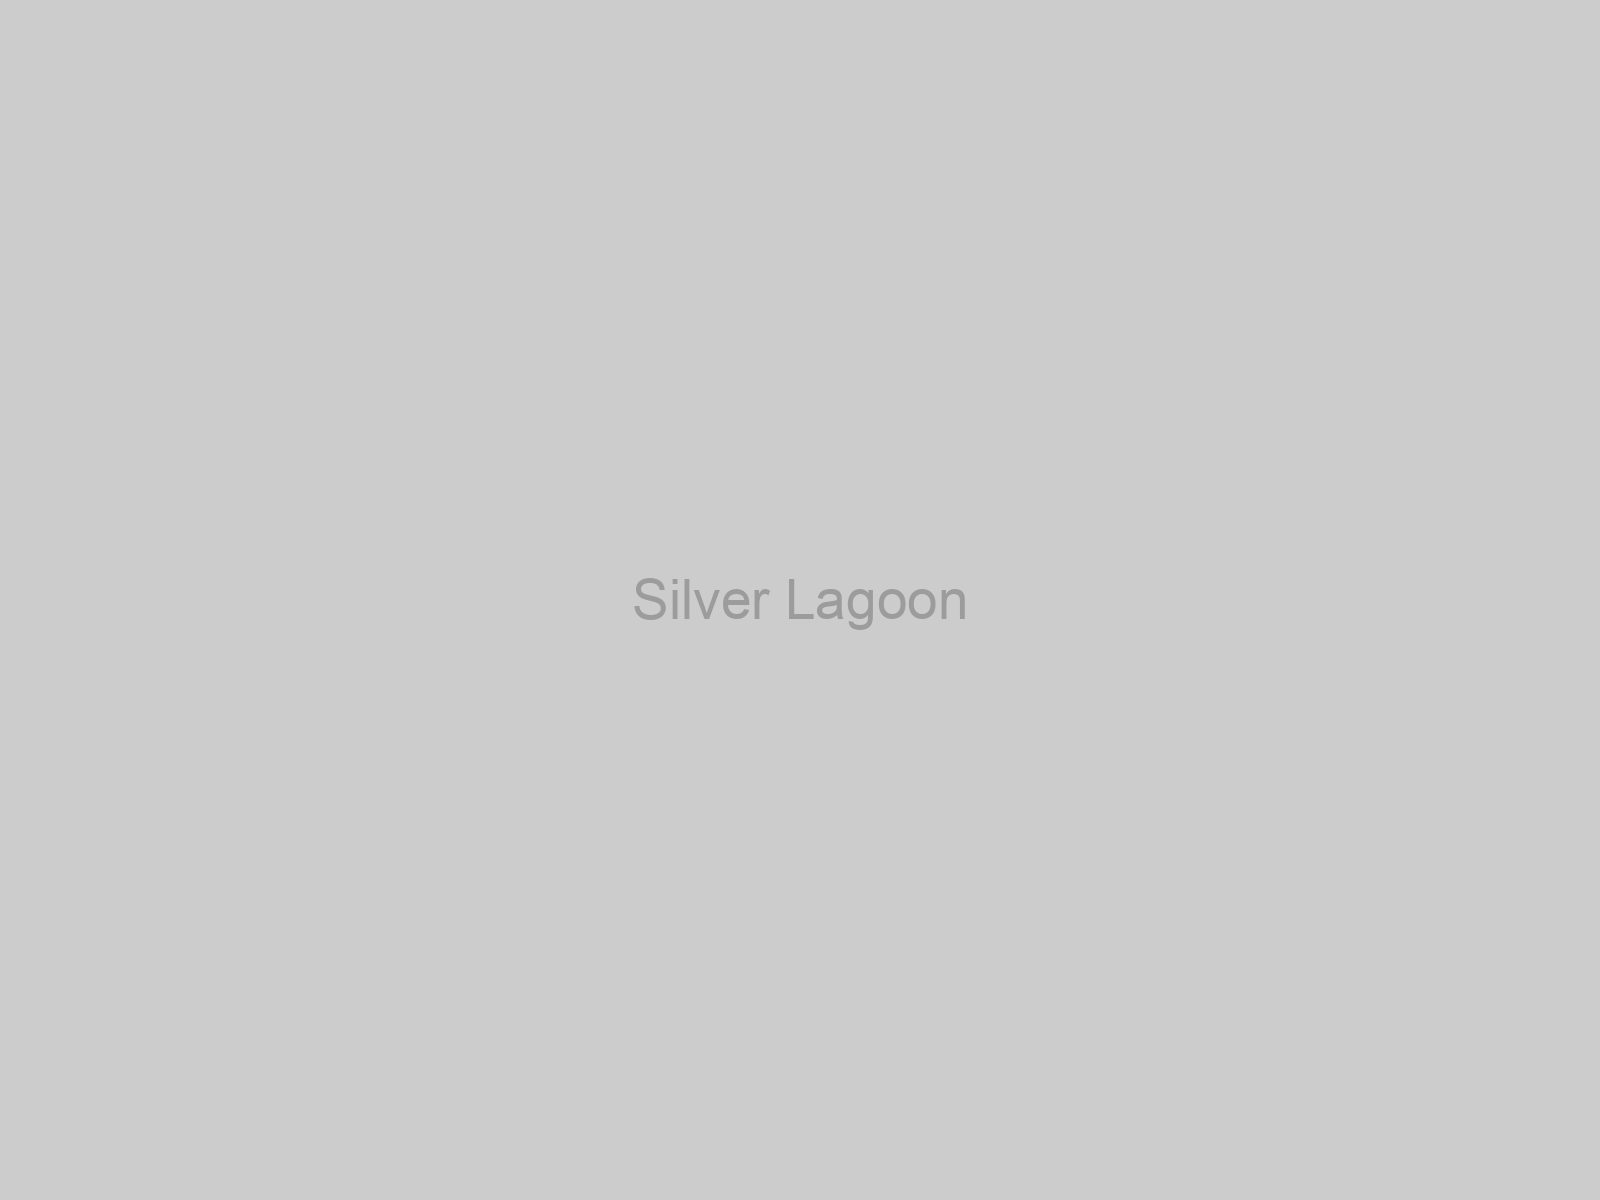 Silver Lagoon